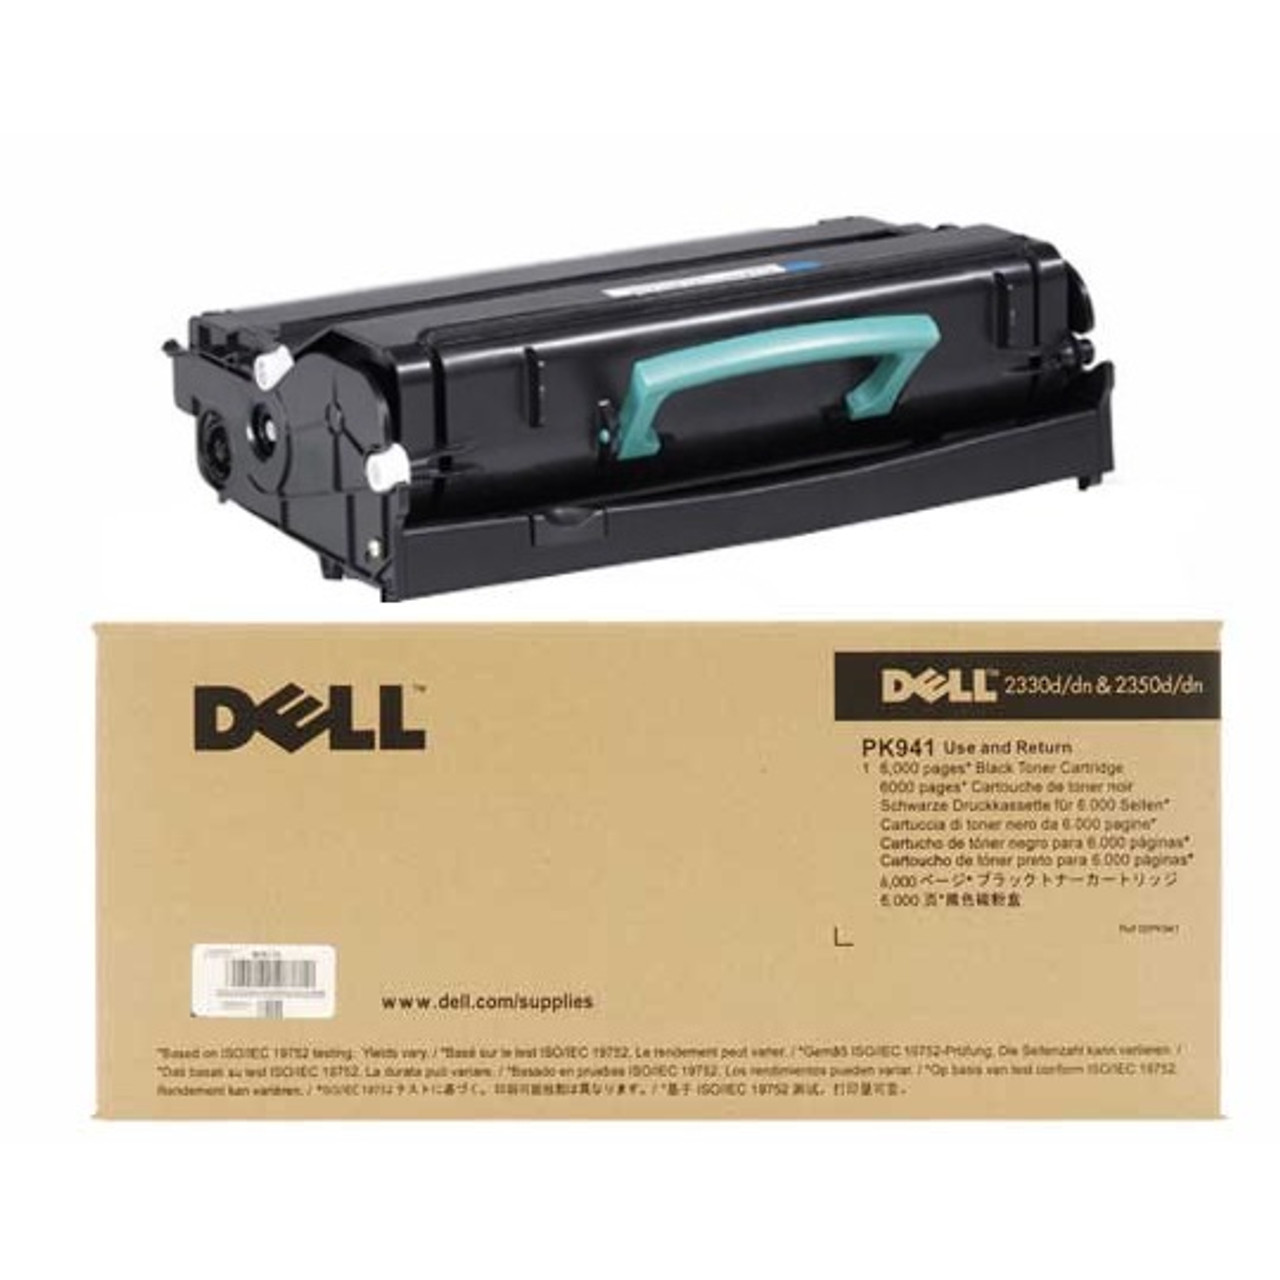 PK937 Original Dell Toner Cartridge – Black Genuine Ink